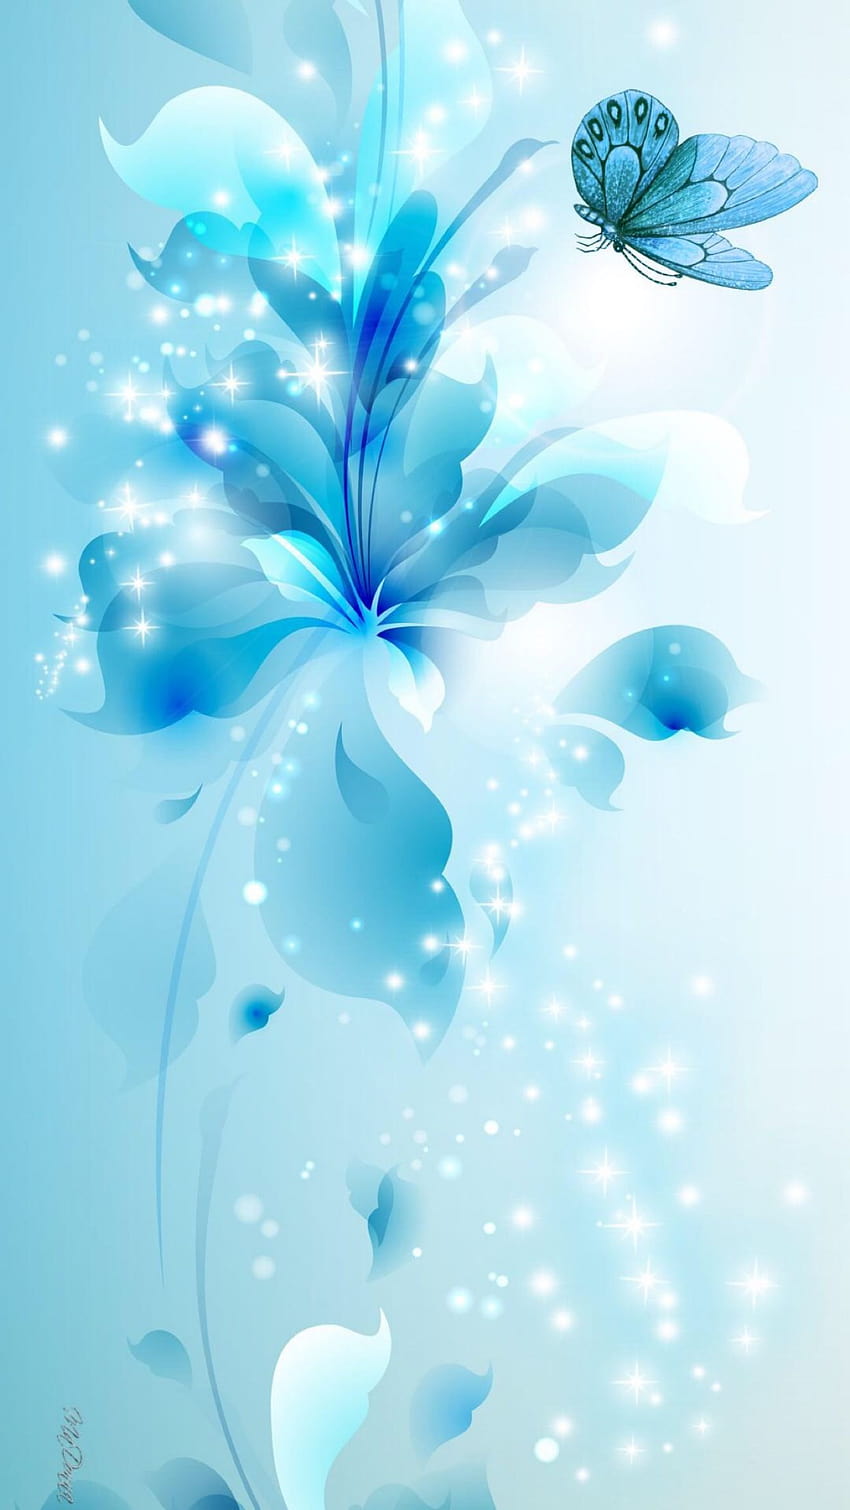 Azul, turquesa, claro, abstracto, mariposa, flores, manzana, iPhone, limpio, hermoso… en 2020, móvil abstracto de color claro fondo de pantalla del teléfono